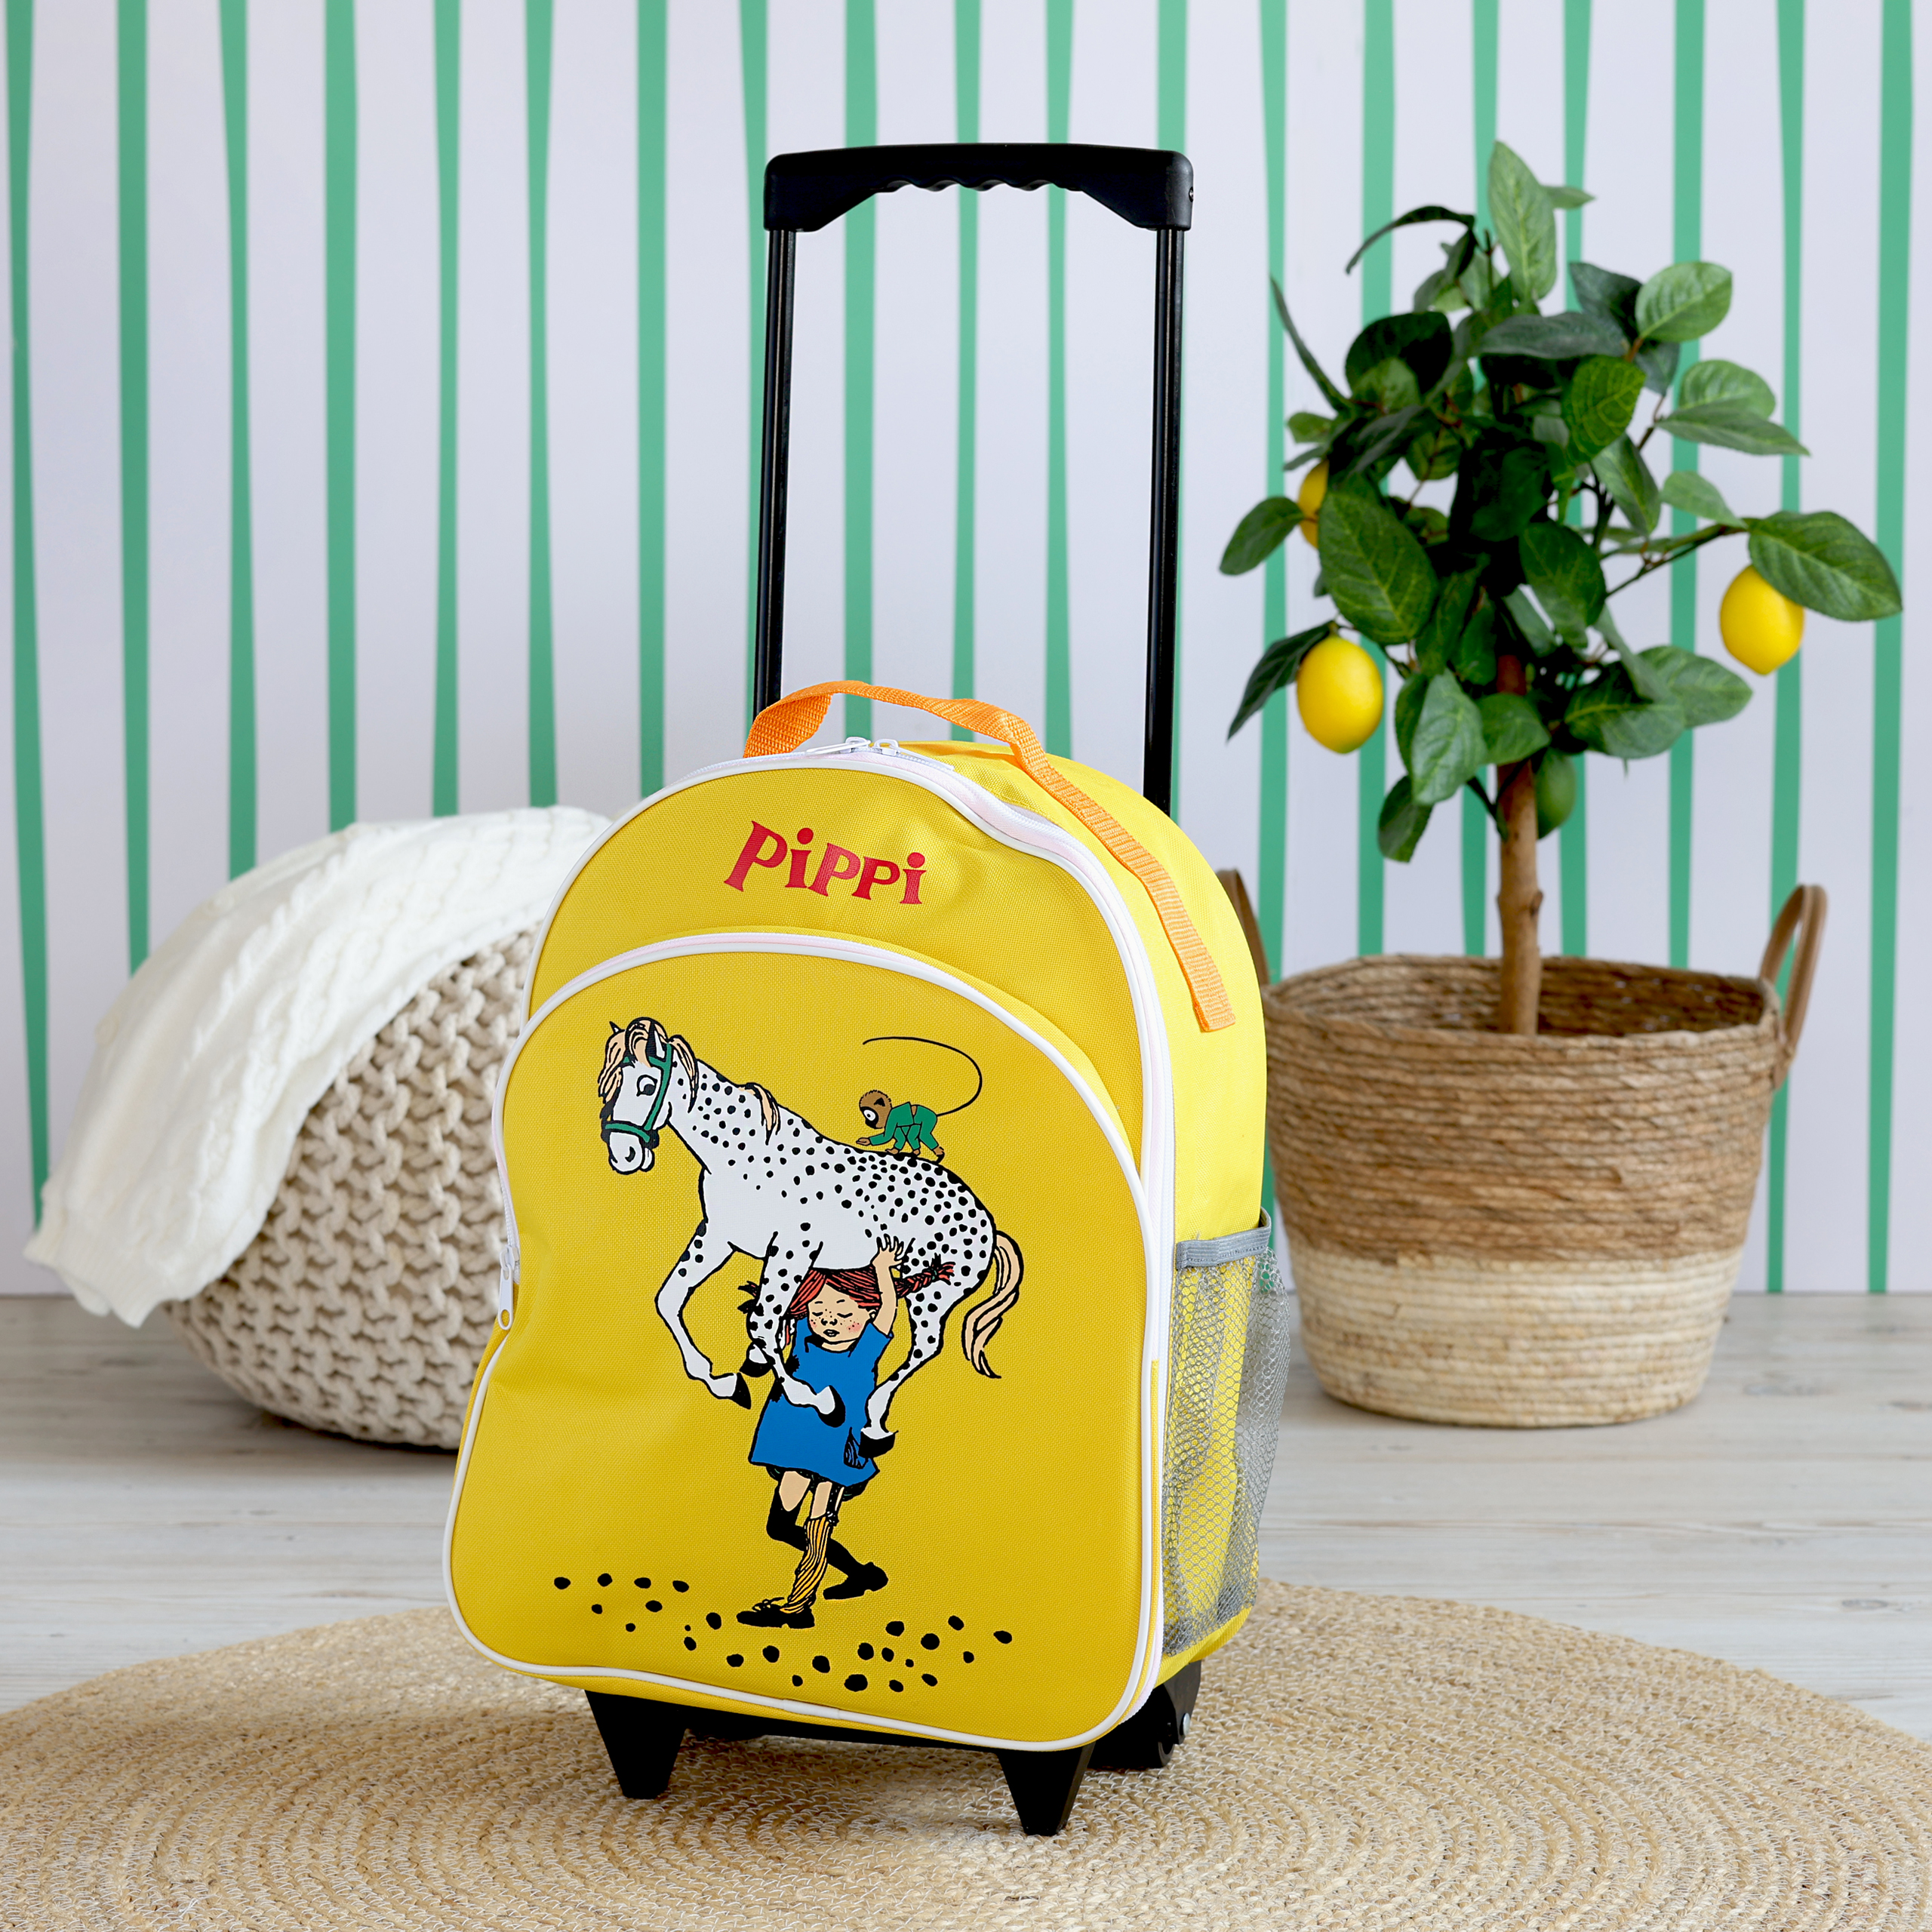 Pippi pippi kids bag travel bag yellow